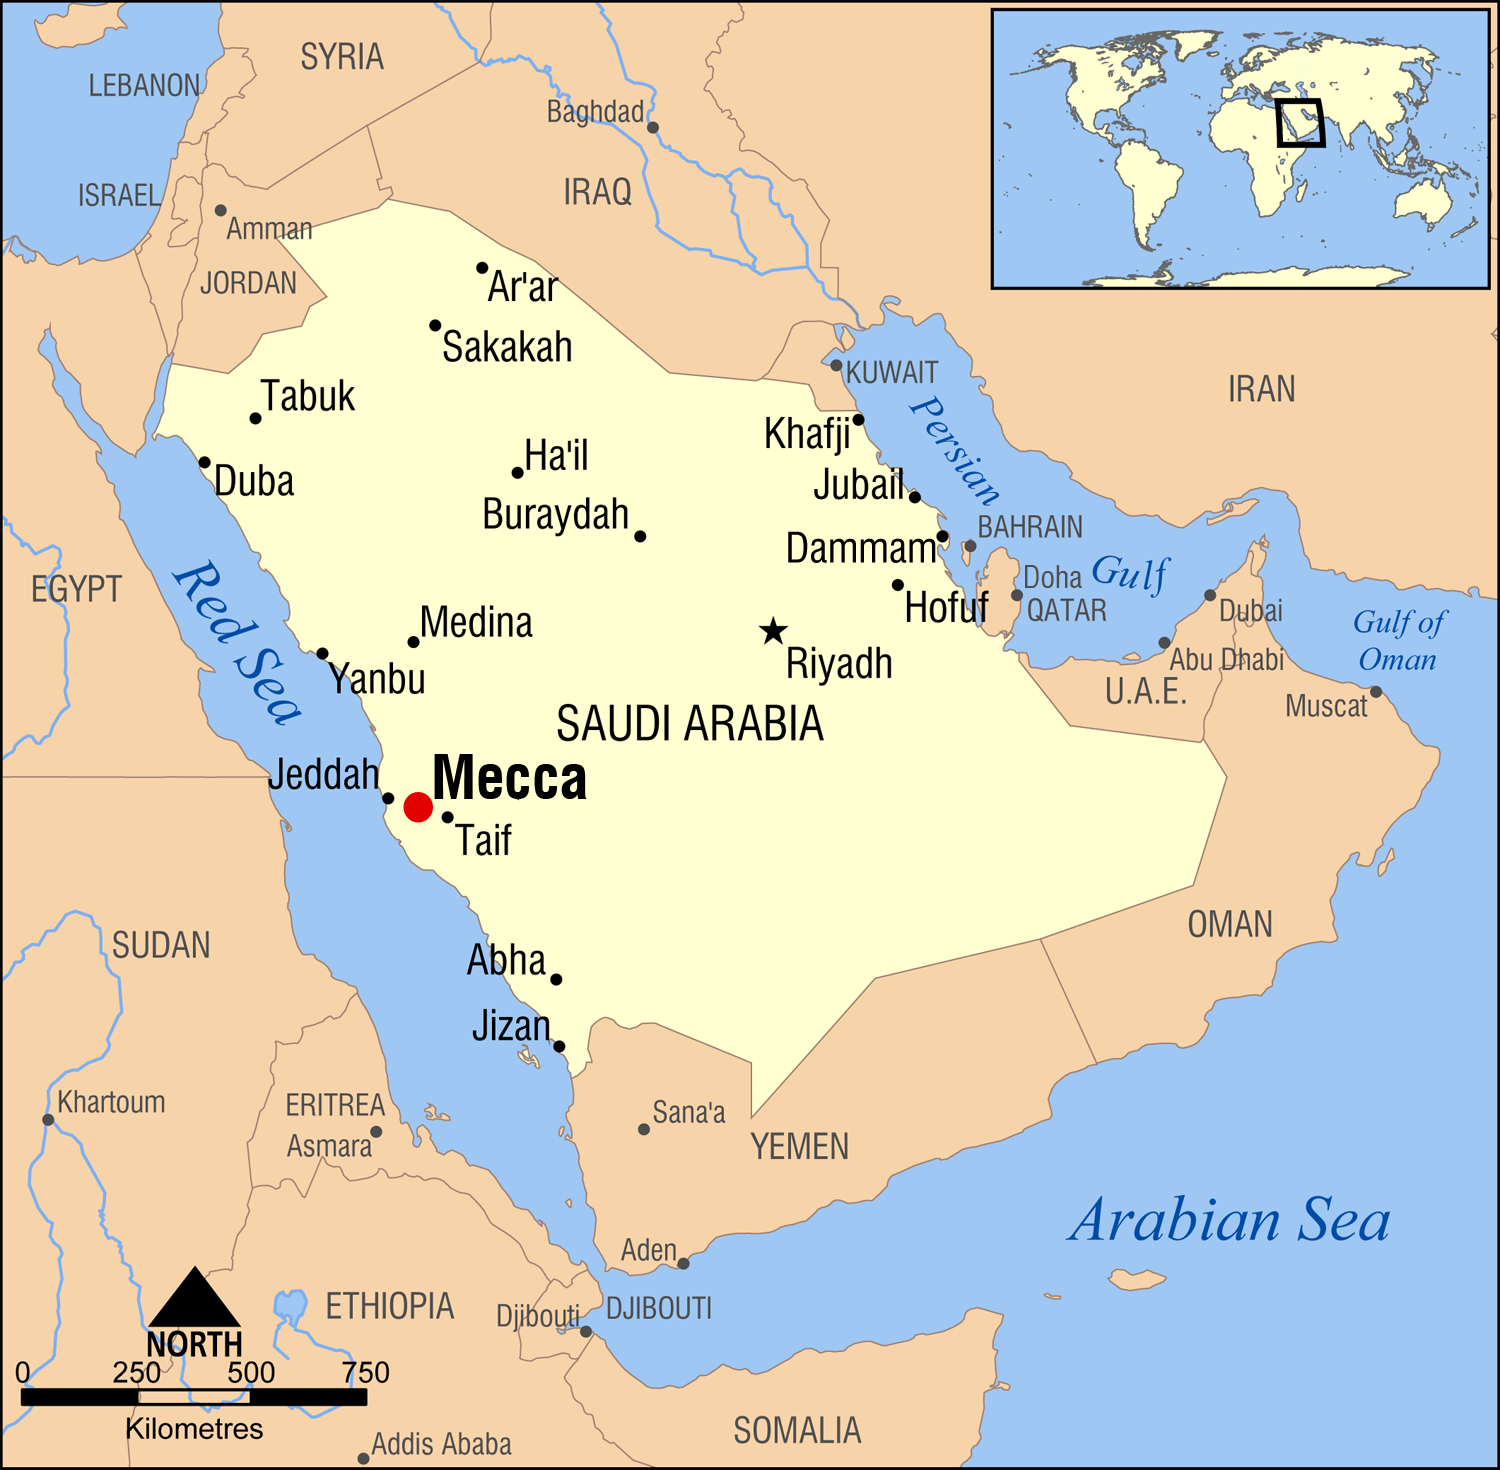 Mecca%2C_Saudi_Arabia_locator_map.png